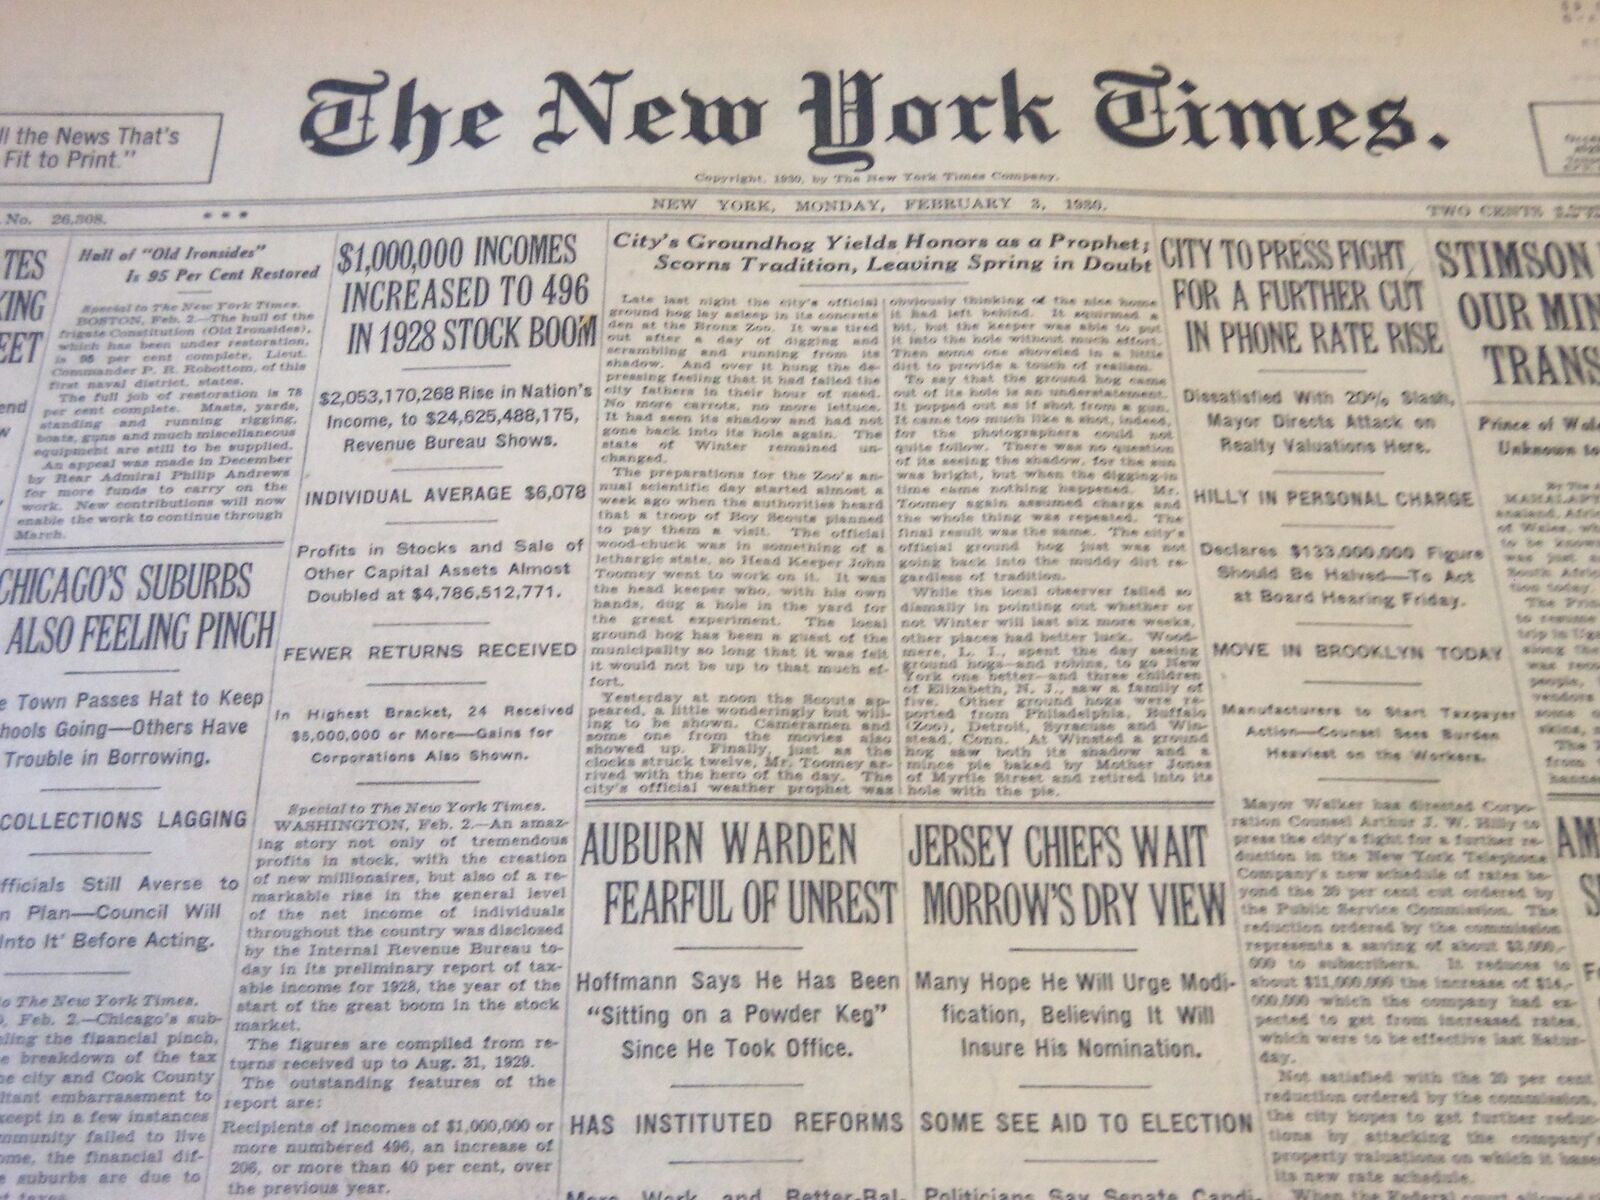 1930 FEBRUARY 3 NEW YORK TIMES - AUBURN WARDEN FEARFUL OF UNREST - NT 5737